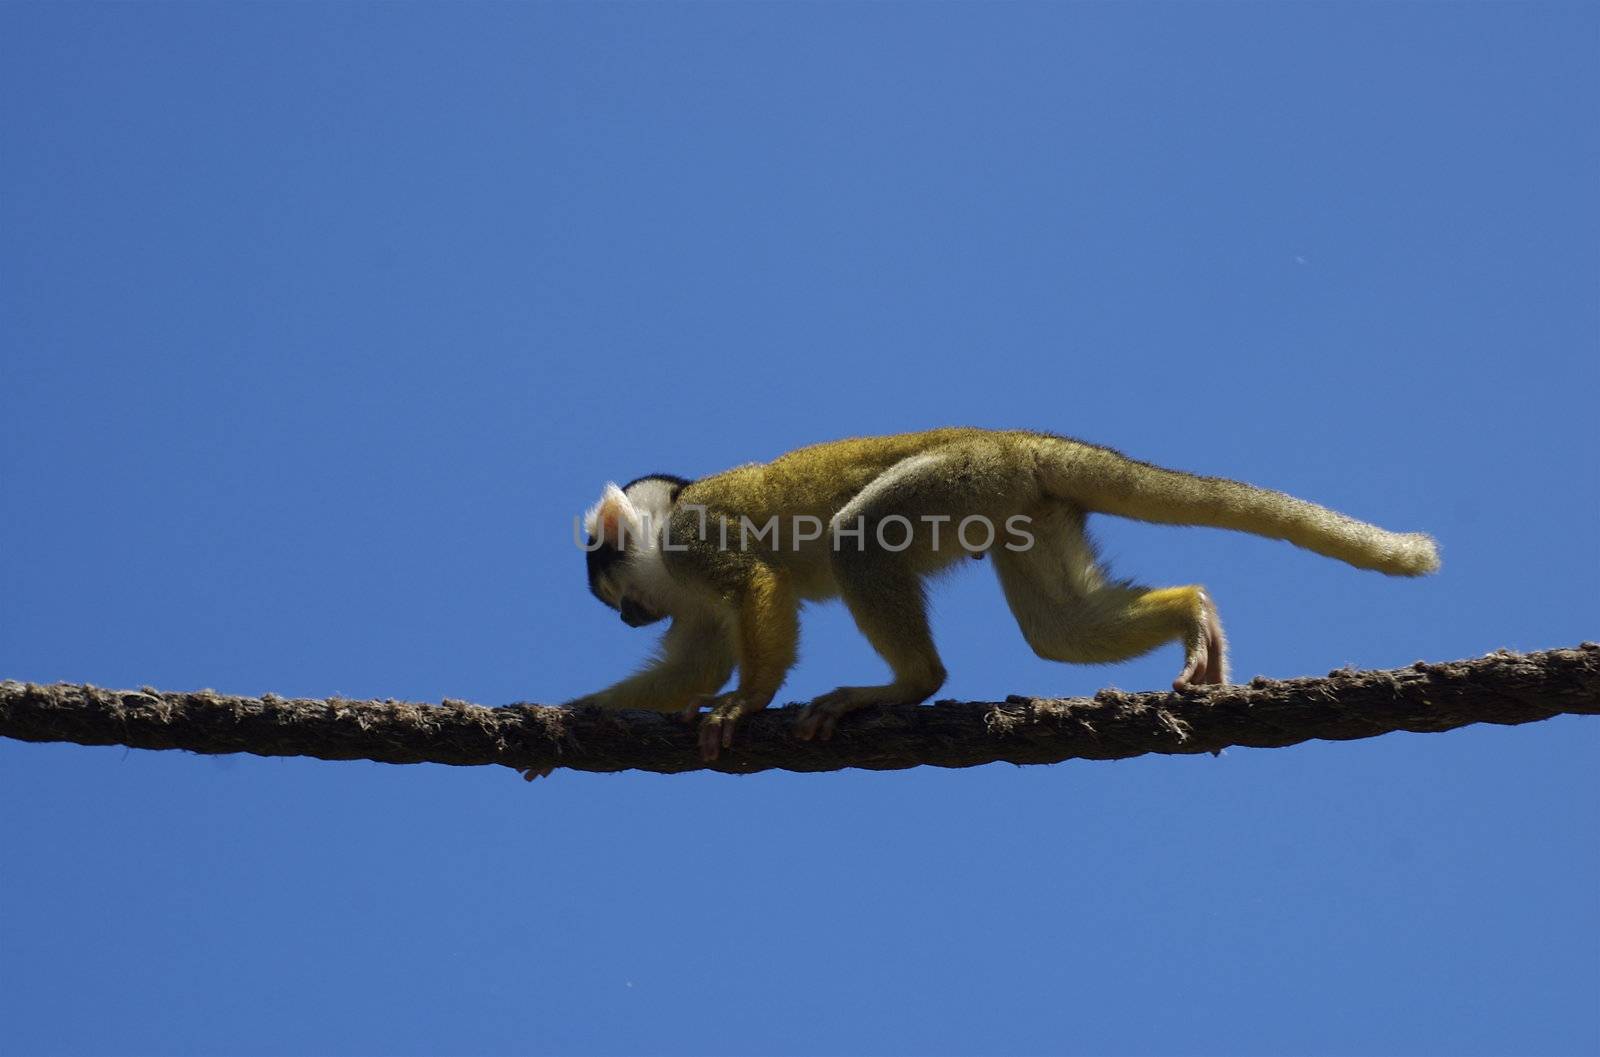 Monkey On A Rope by PrincessToula